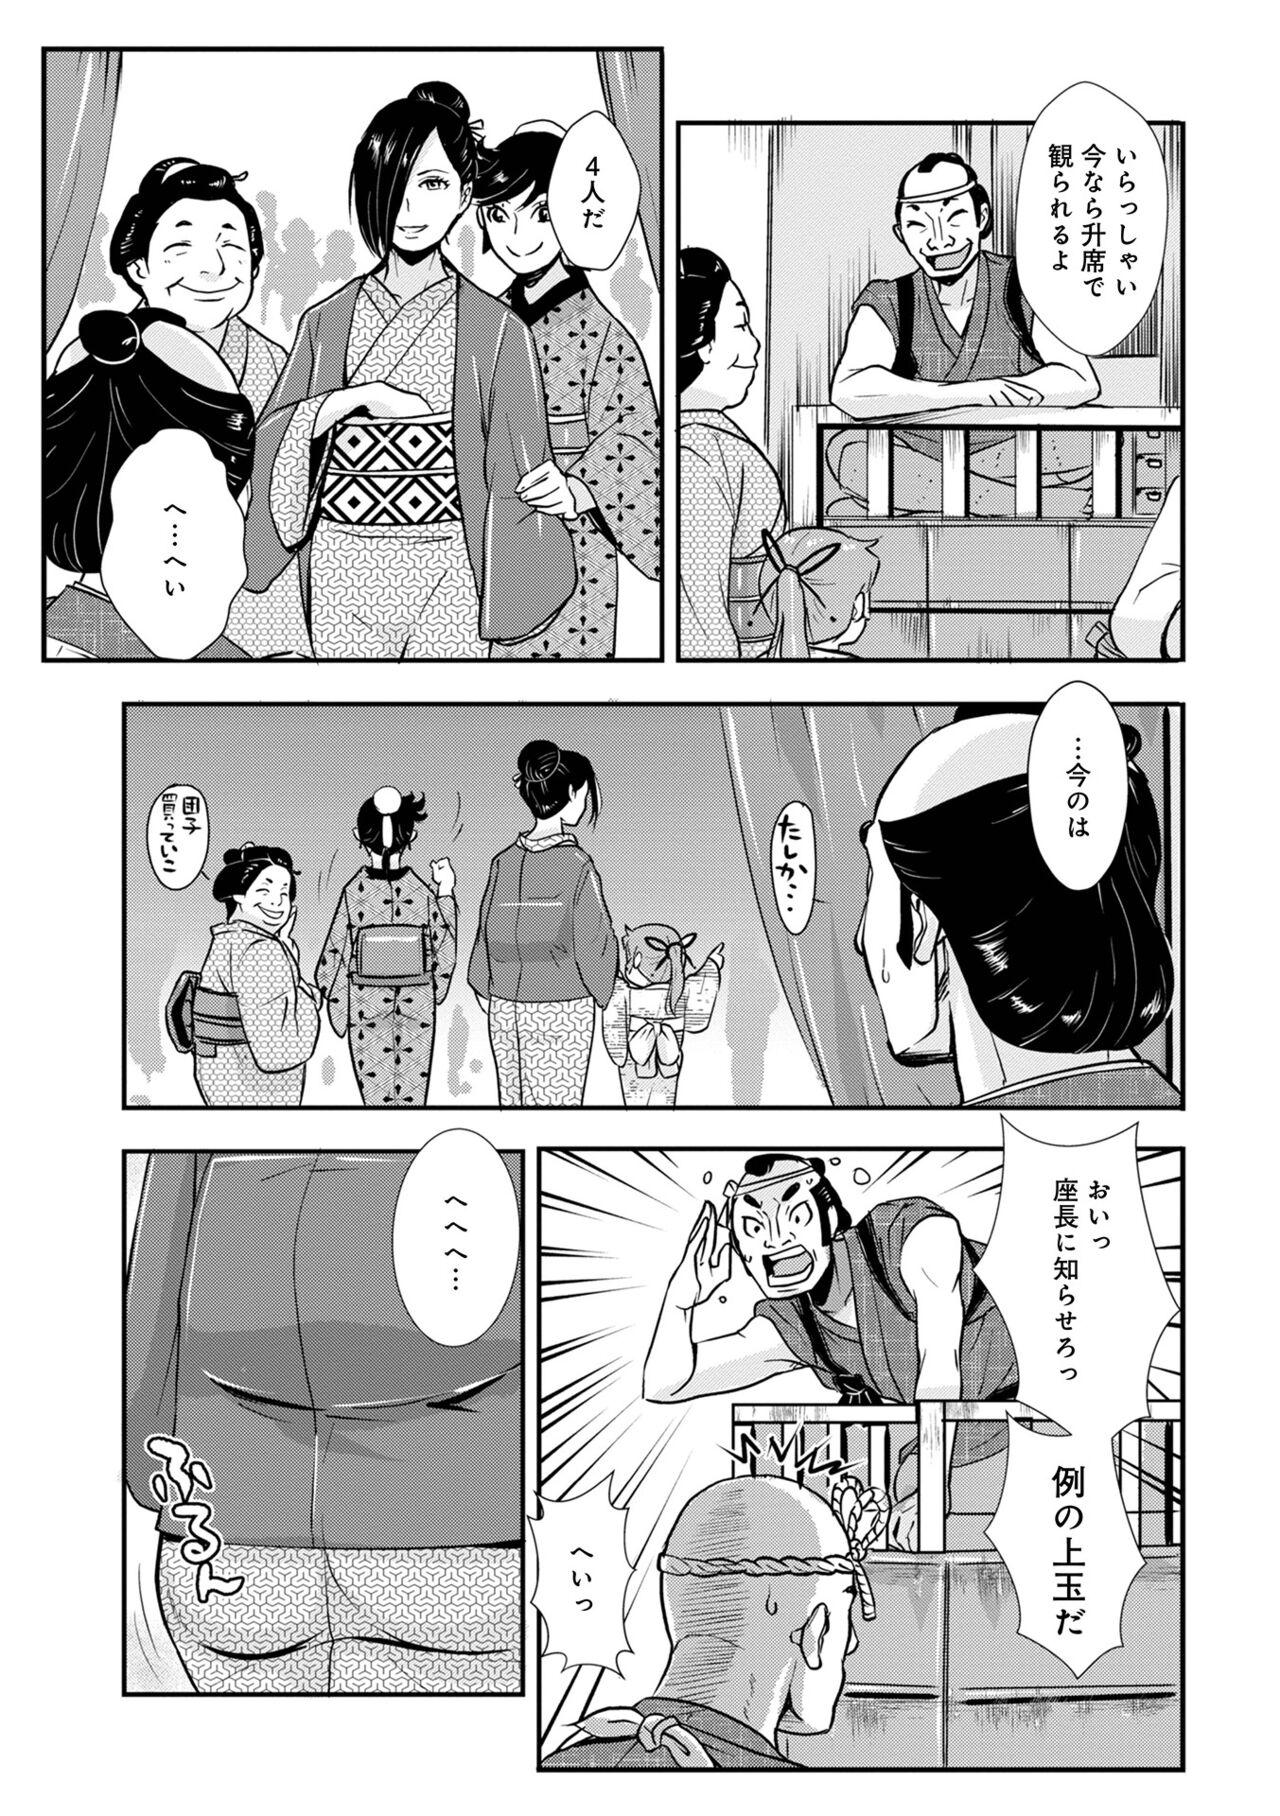 Zorra Harami samurai 14 Safadinha - Page 9